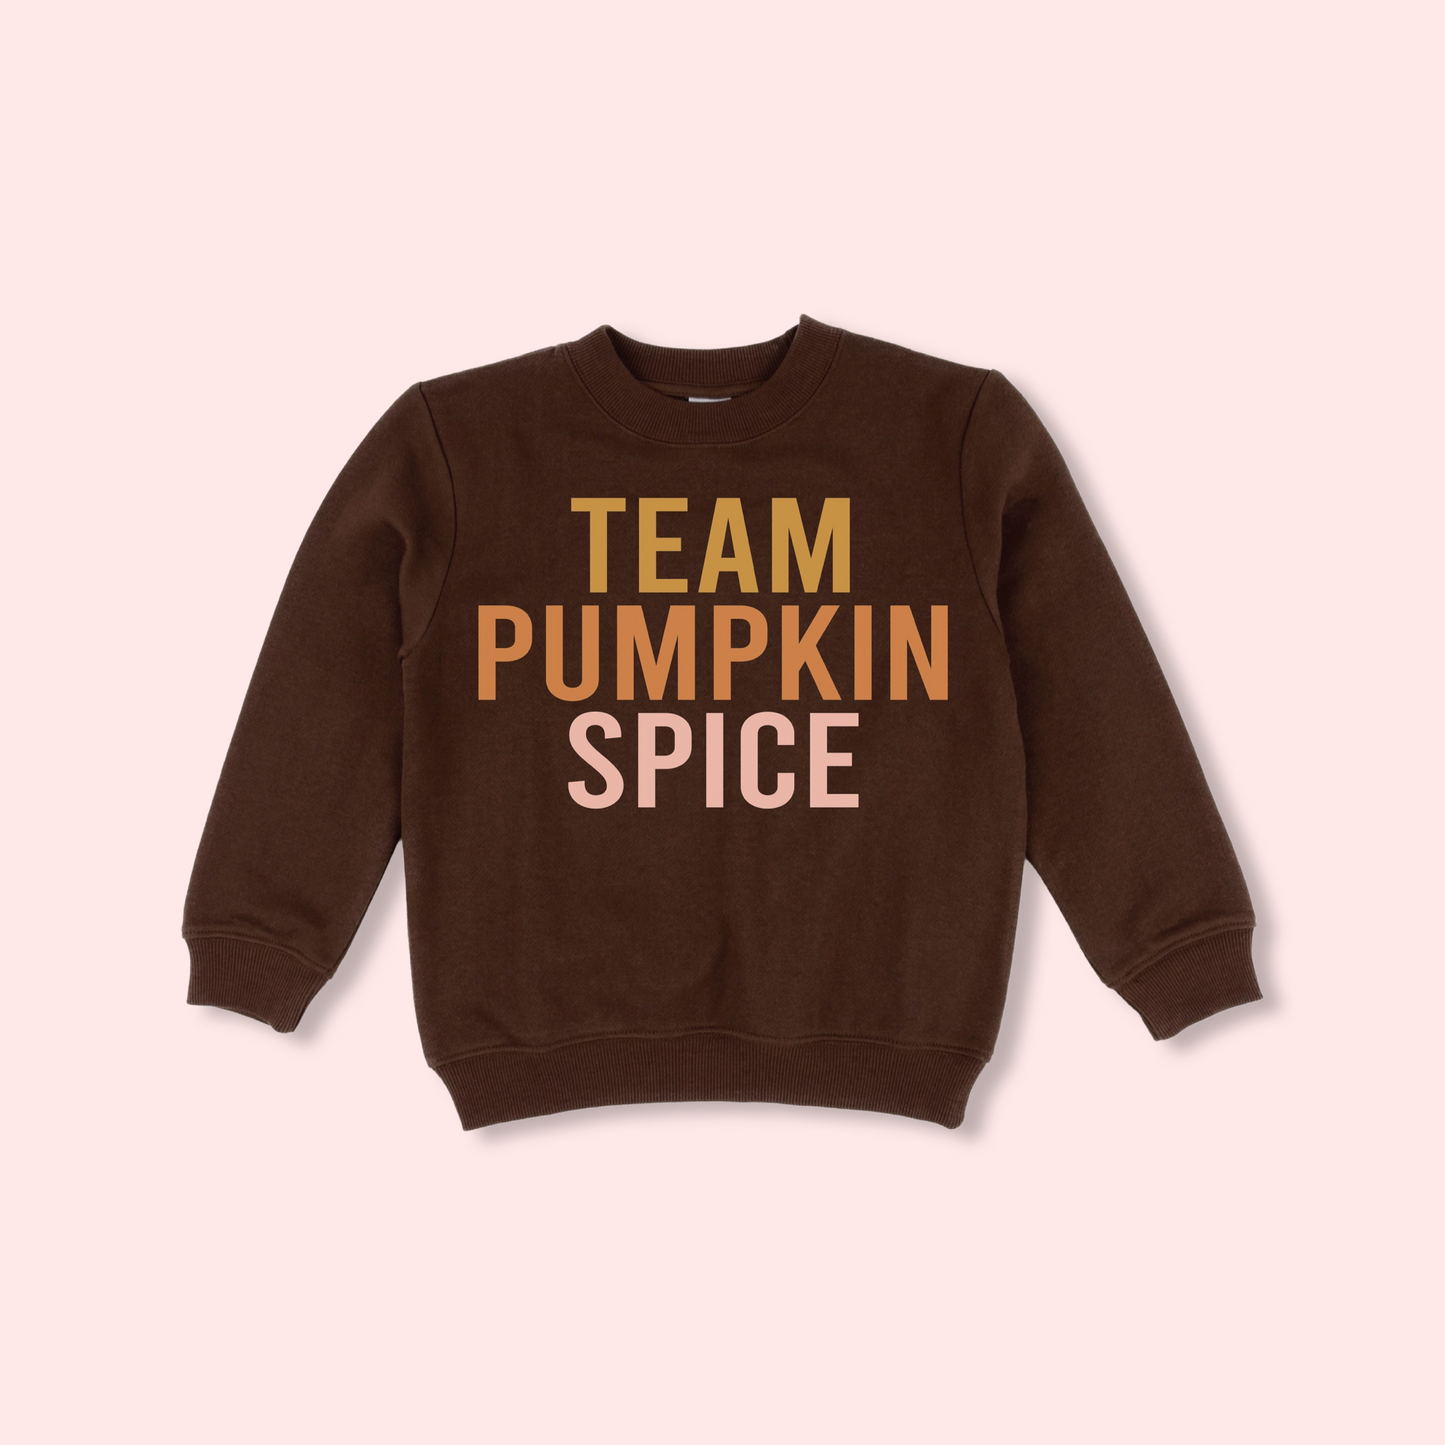 Team Pumpkin Spice Pullover - Chocolate